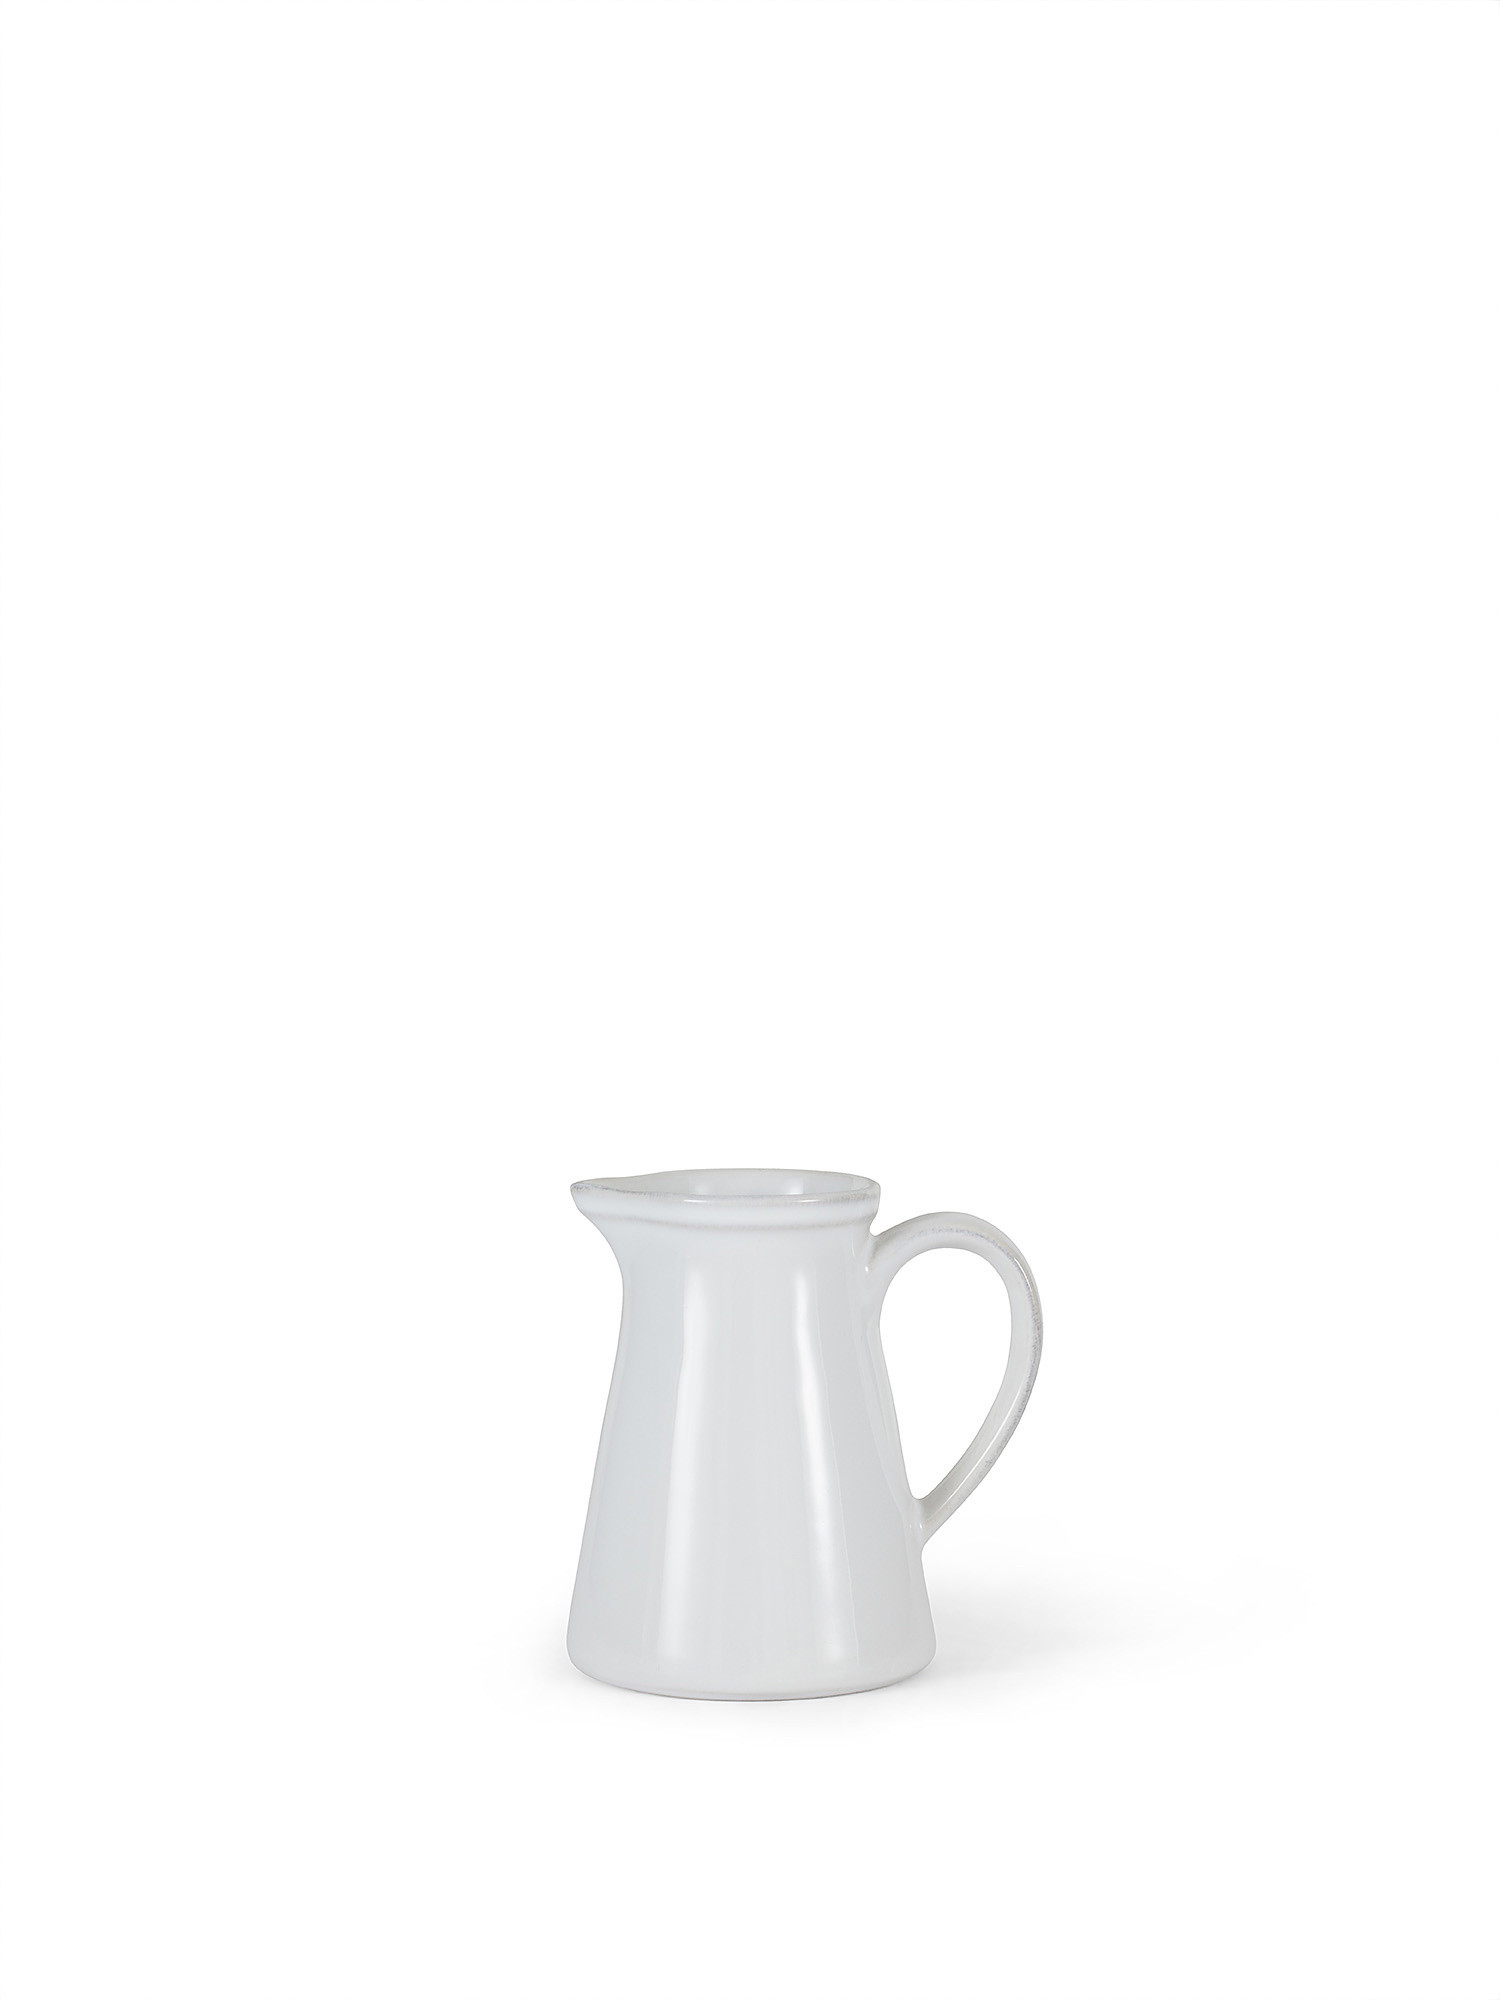 Friso ceramic milk jug, White, large image number 0